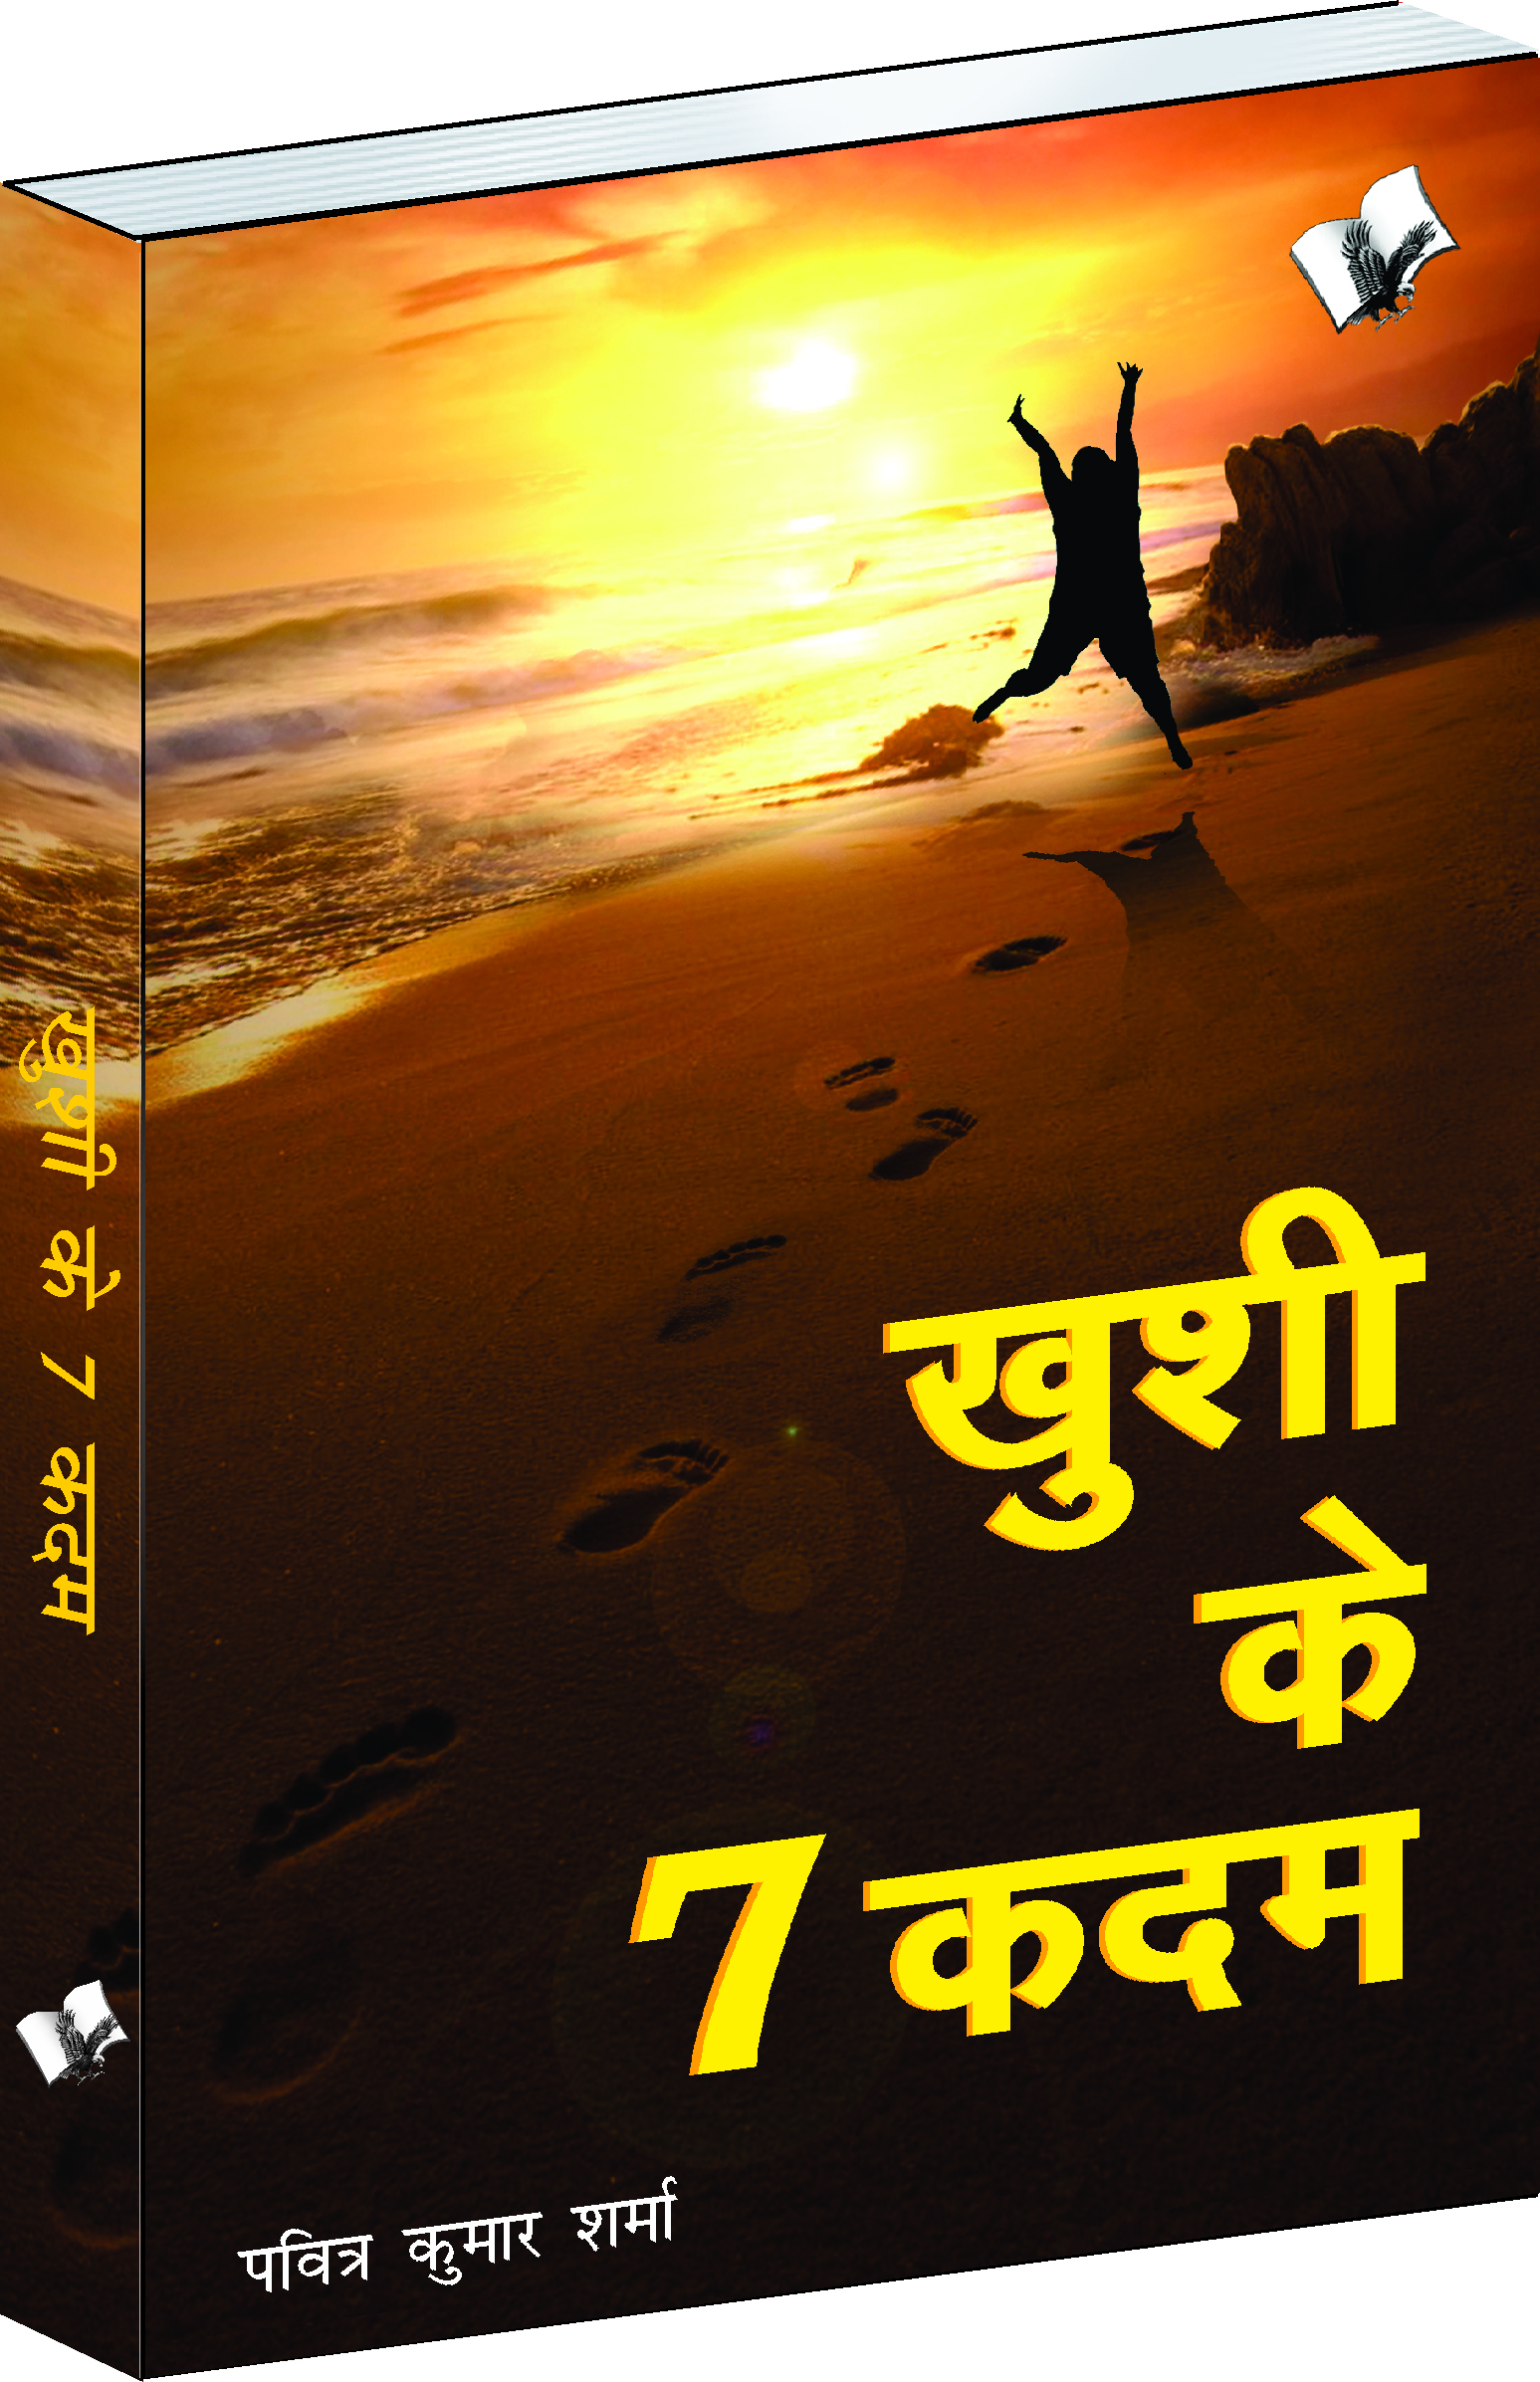 Khushi Ke 7 Kadam-7 points that ensure a life worth enjoying